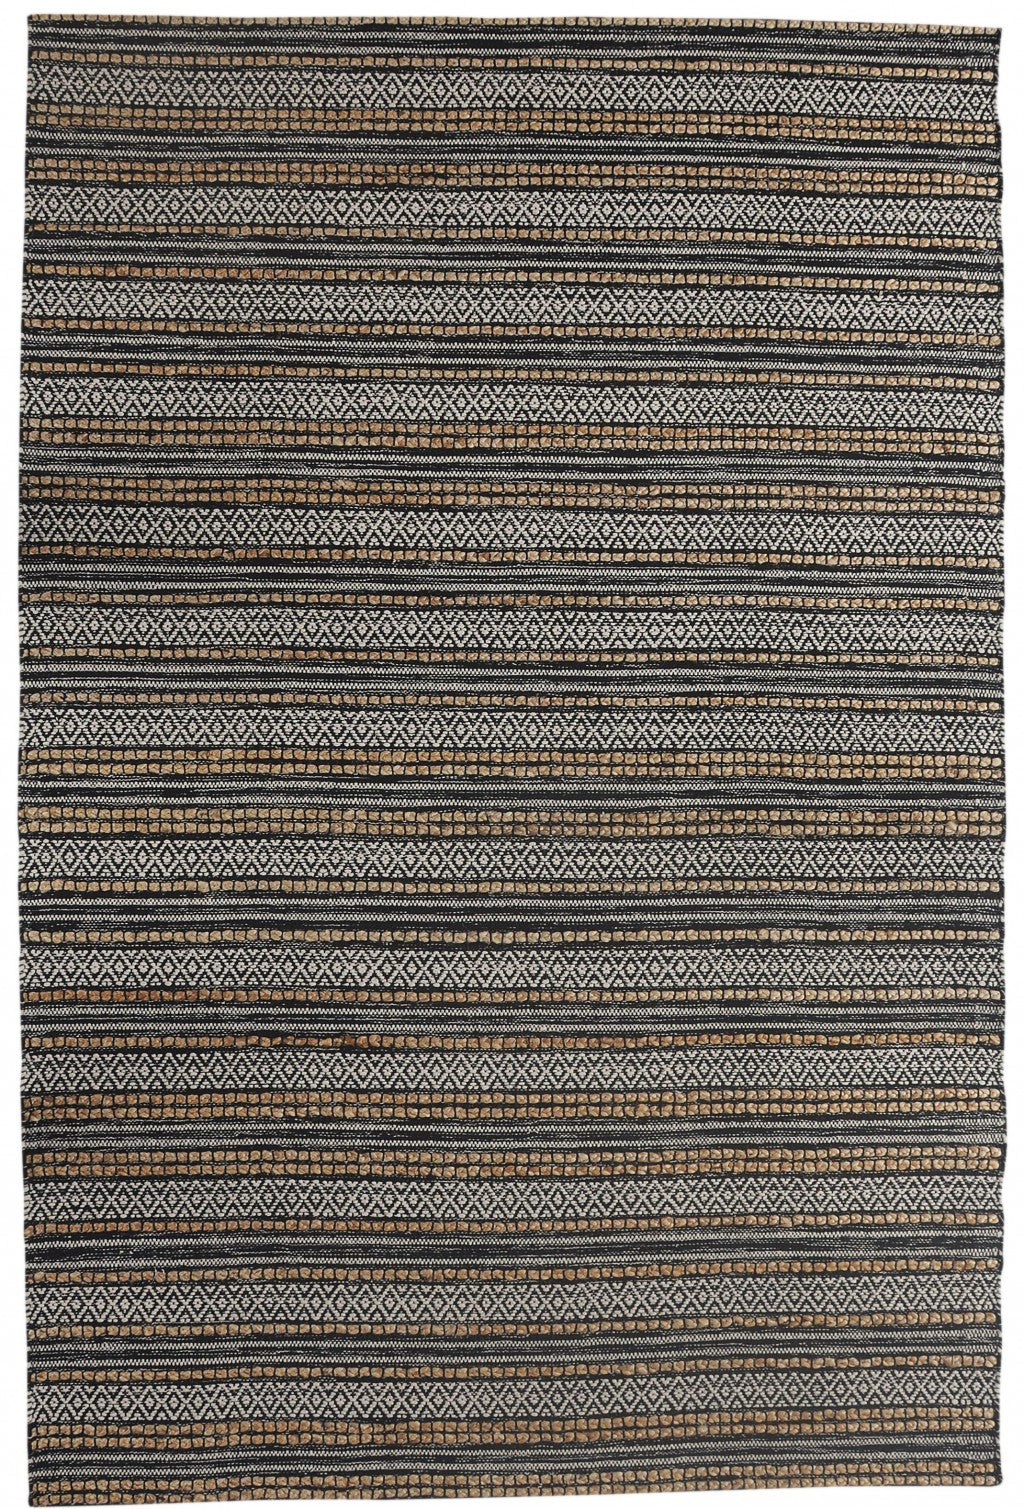 8’ x 10’ Black and Tan Decorative Striped Area Rug